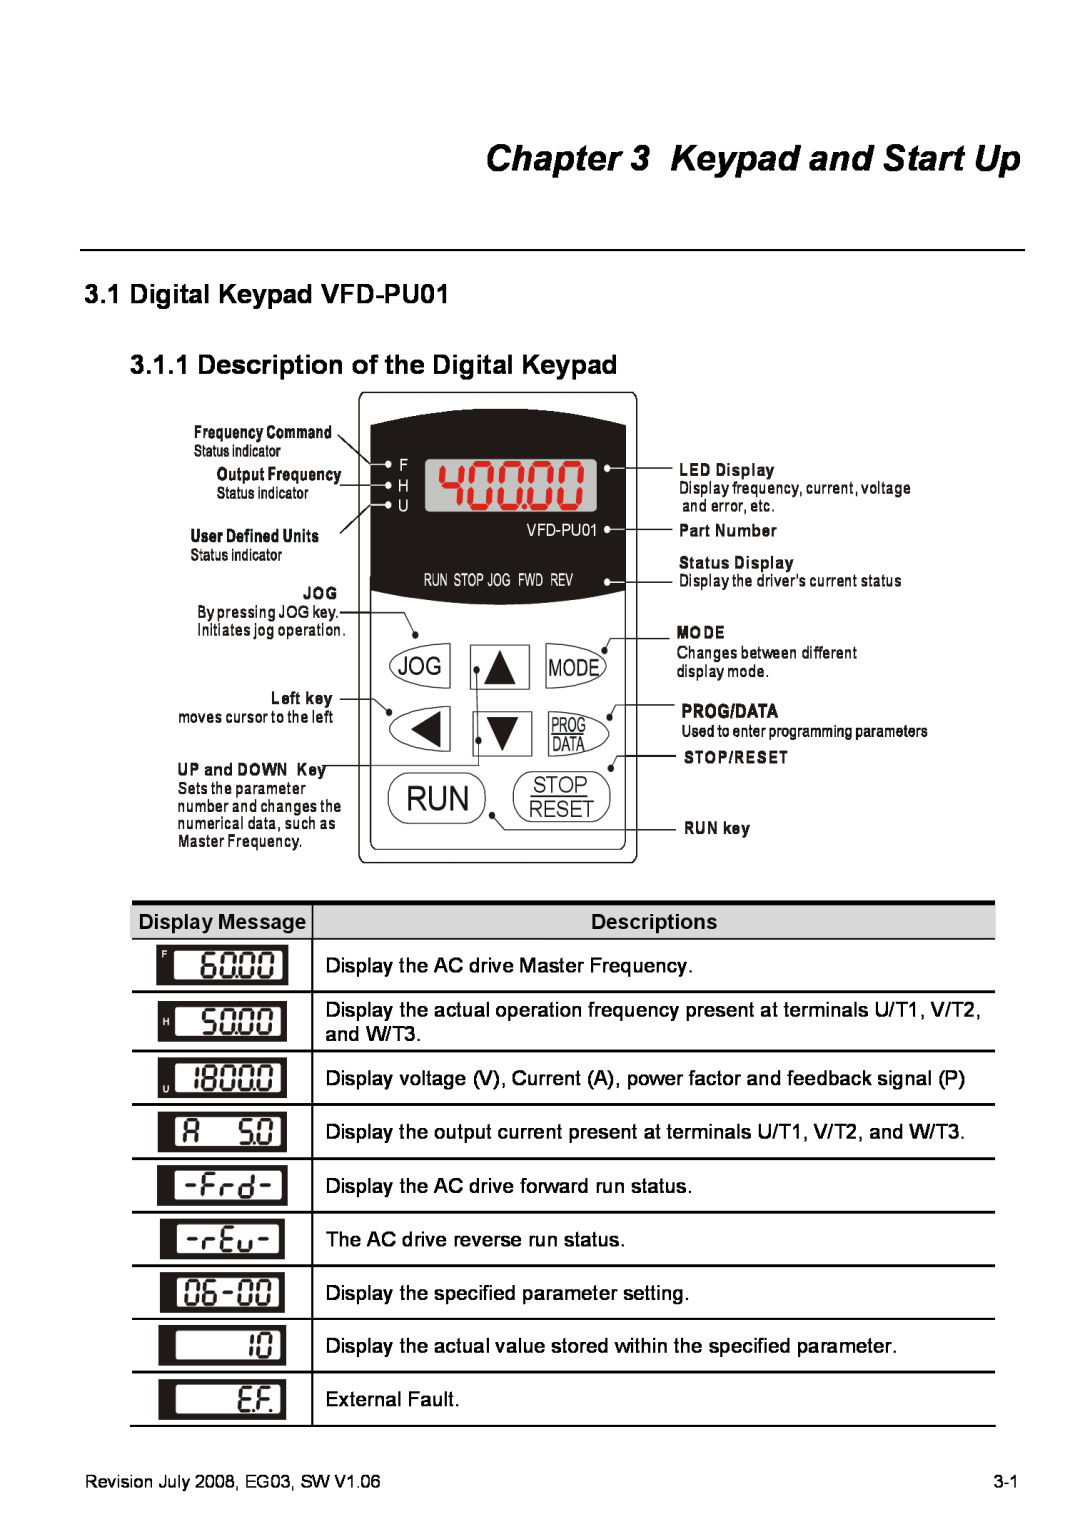 Delta Electronics VFD-G Keypad and Start Up, Digital Keypad VFD-PU01 3.1.1 Description of the Digital Keypad, Stop Reset 